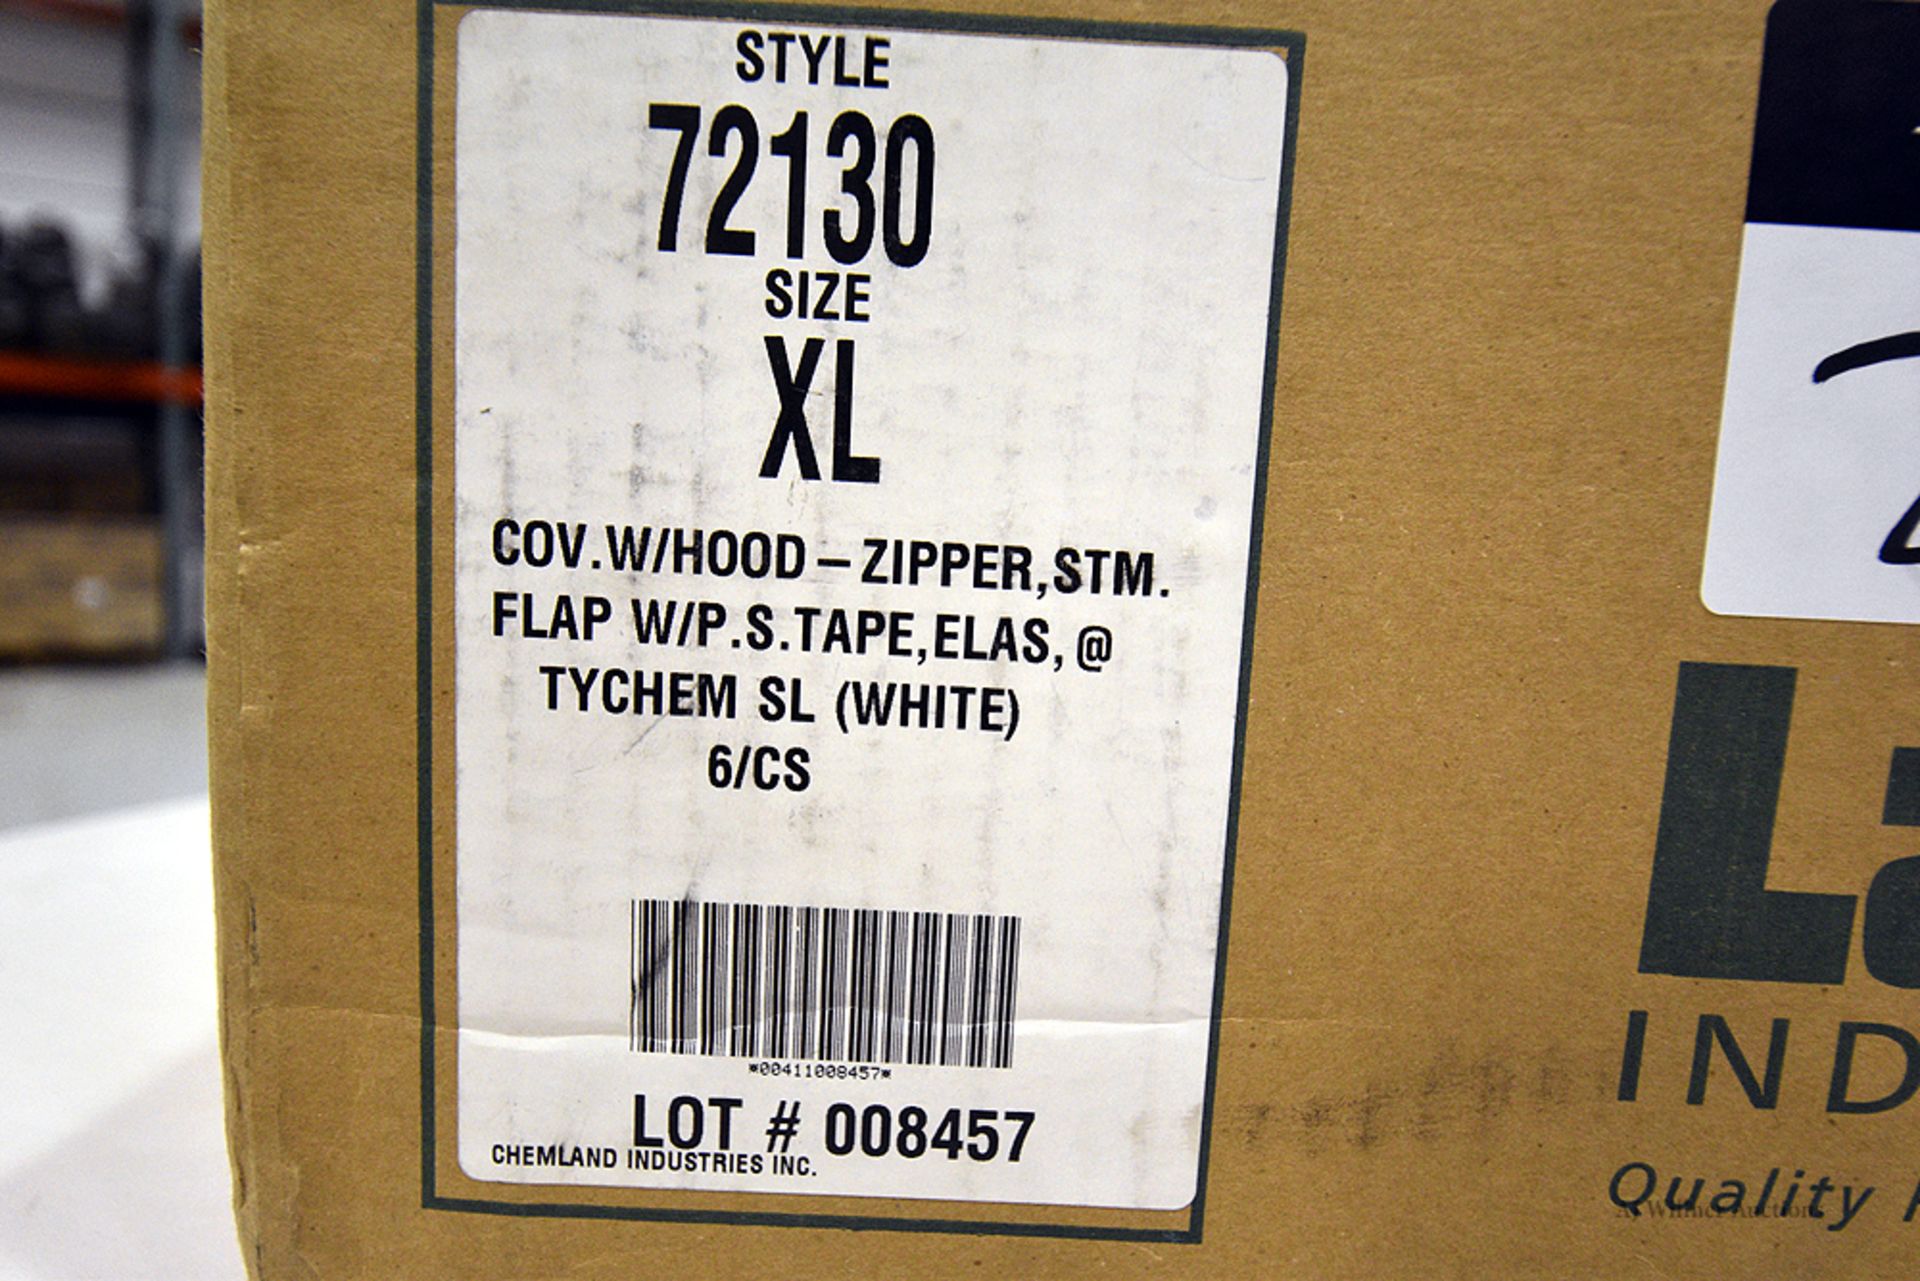 Boxes of 30pc - Lakeland 72130 XL Cov/Hood/Zipper/Flap/P.S.Tape, Elastic/ Tychem SL (White) - Image 2 of 2